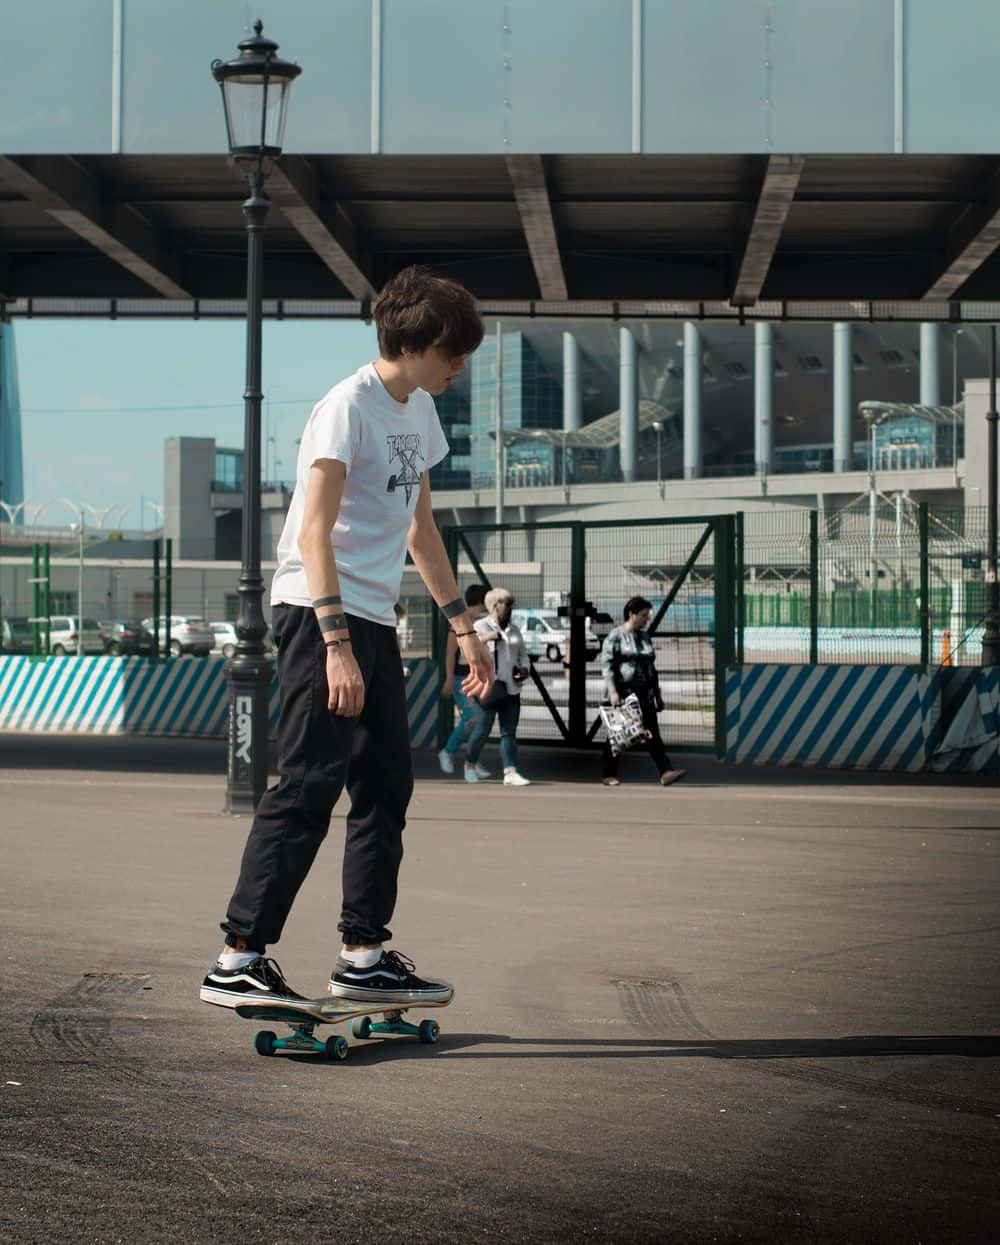 Skateboardingmit Stil